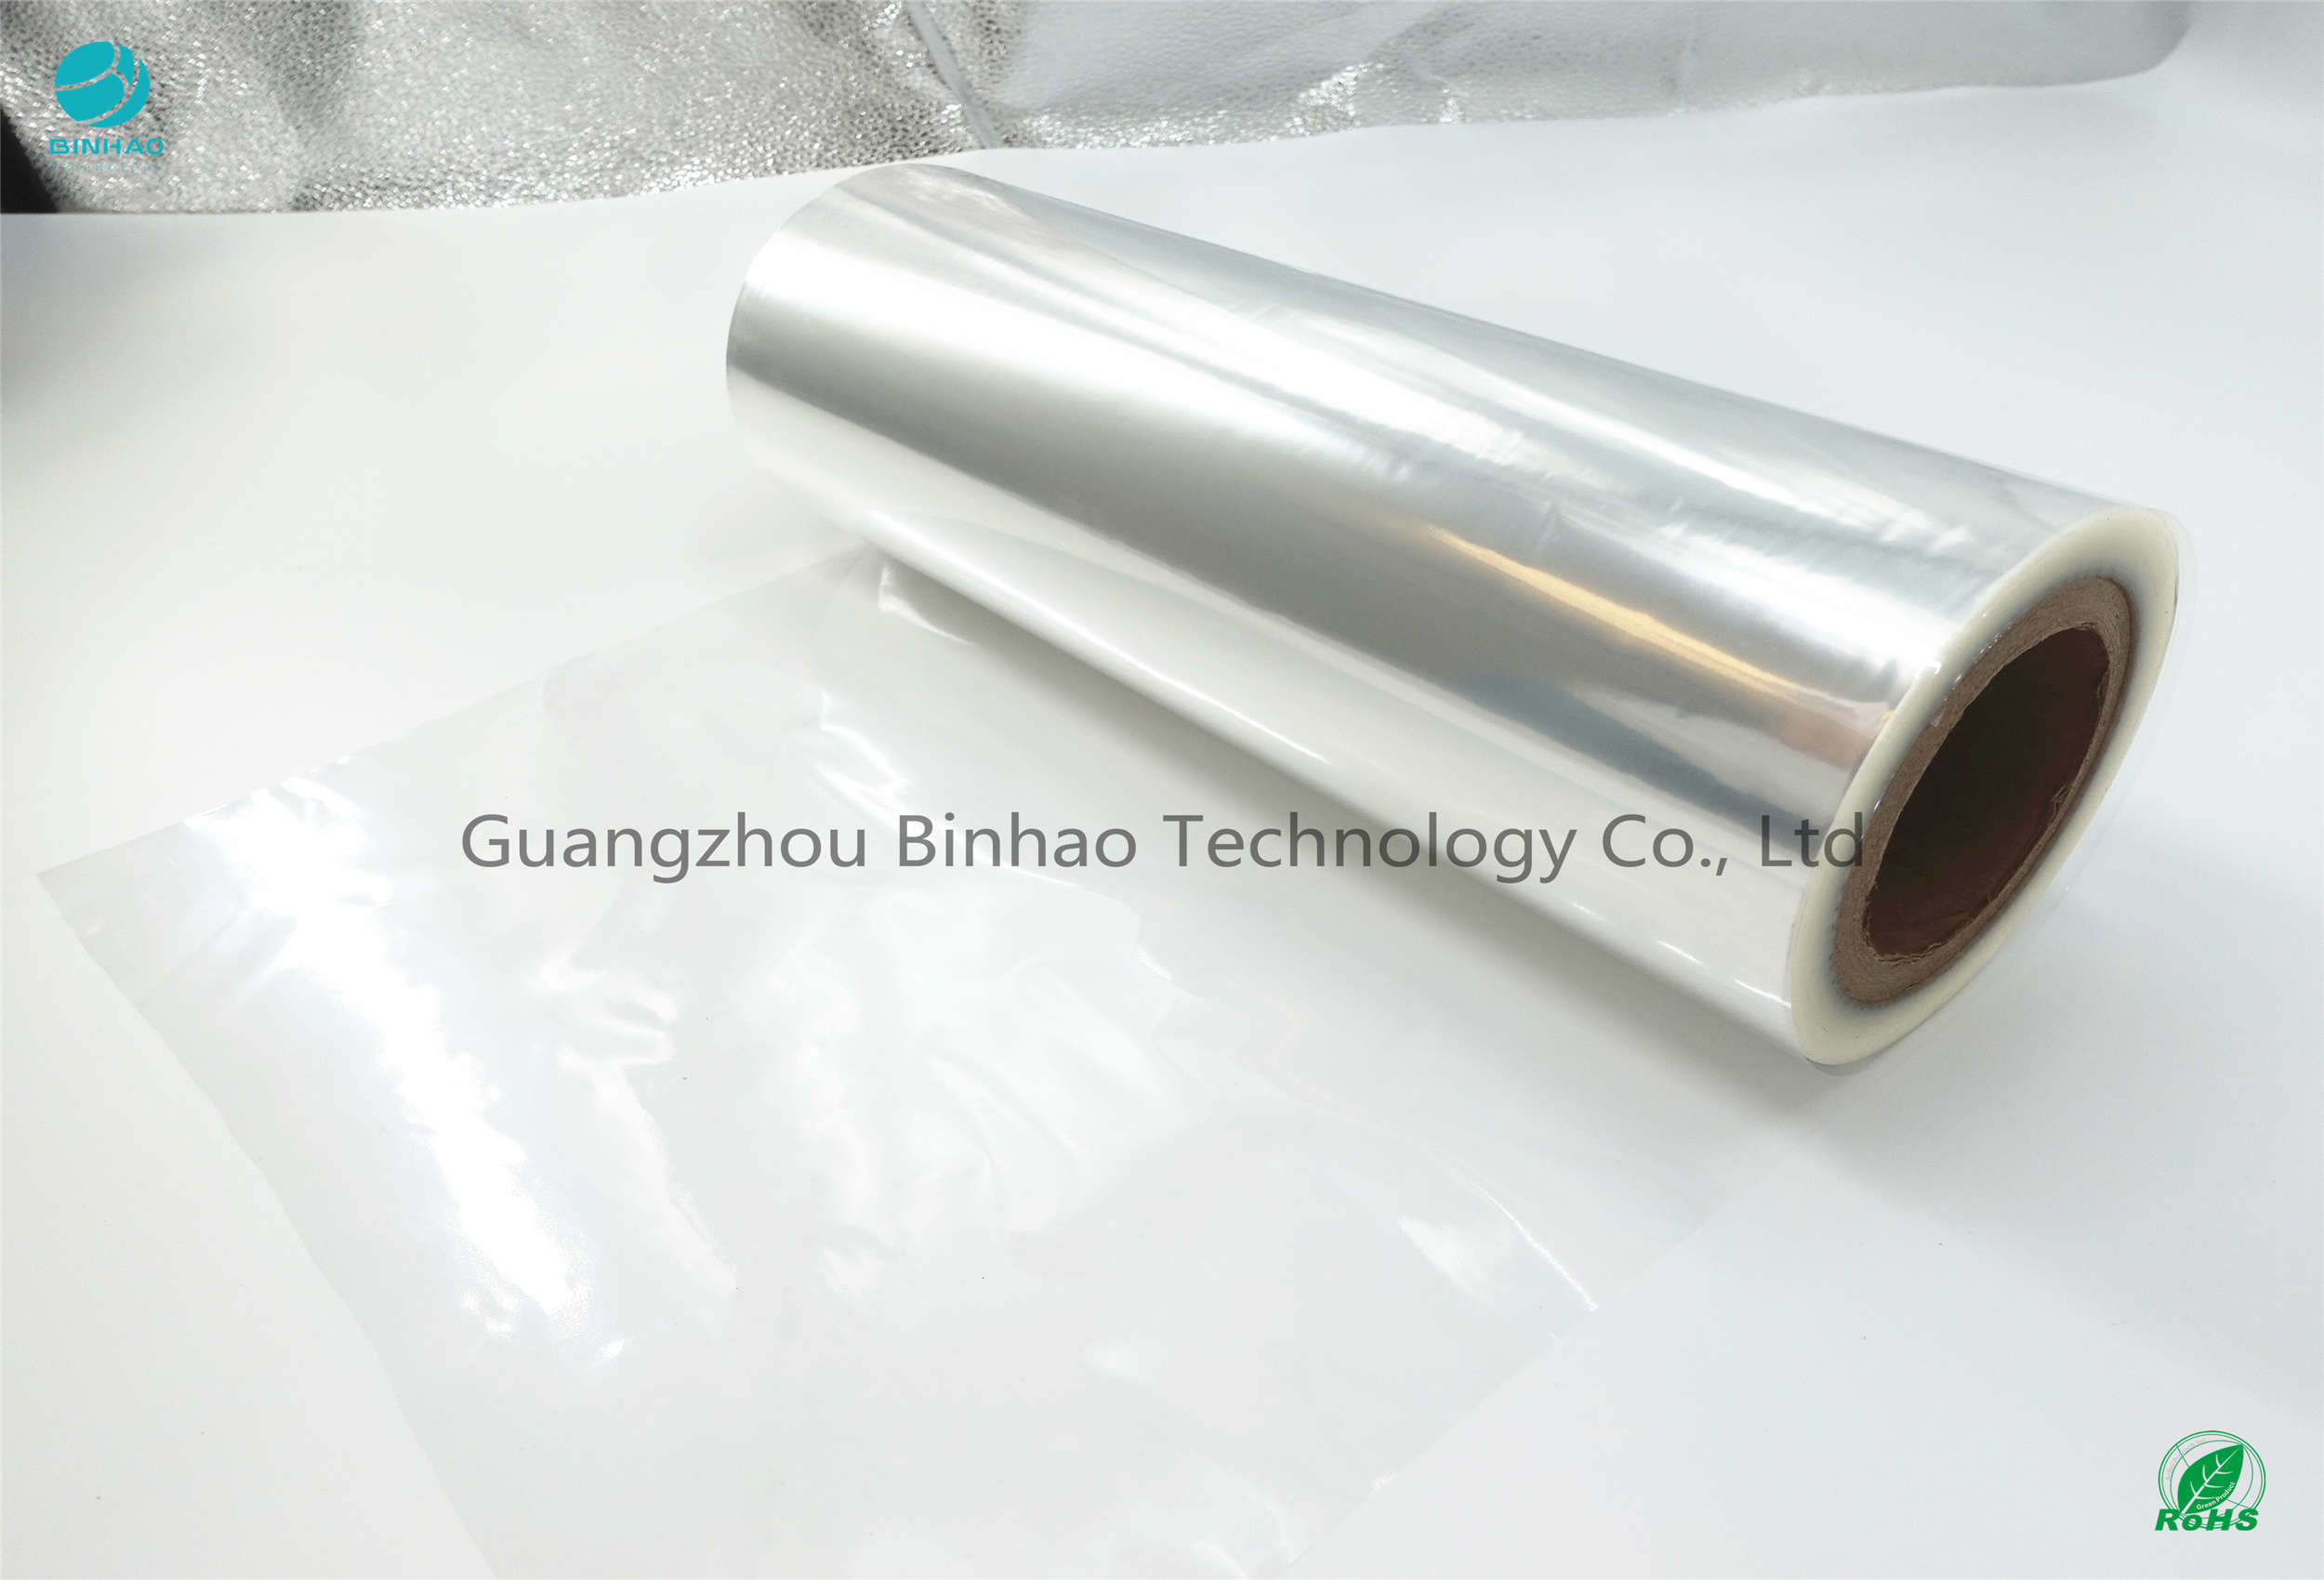 1,40 G / Cm3 970mm Film Kemasan PVC Tembakau Tahan Penuaan